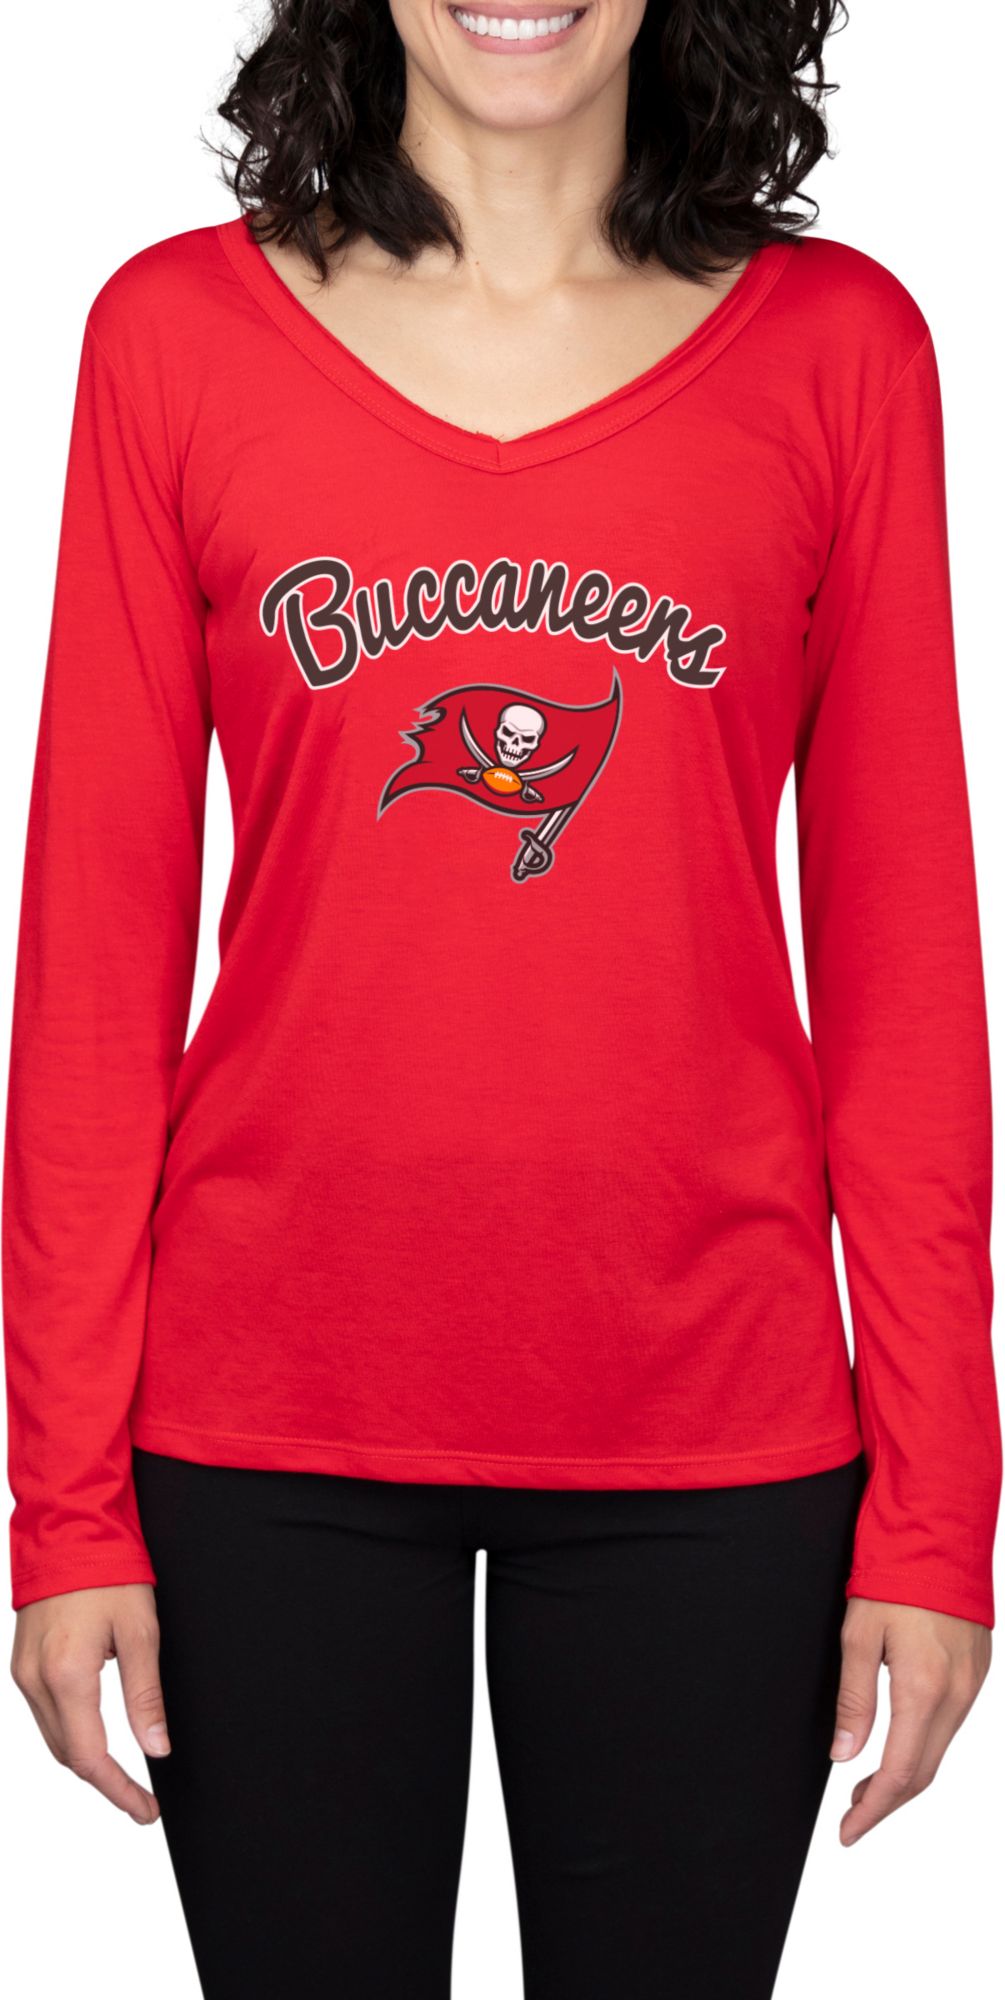 womens buccaneer shirt